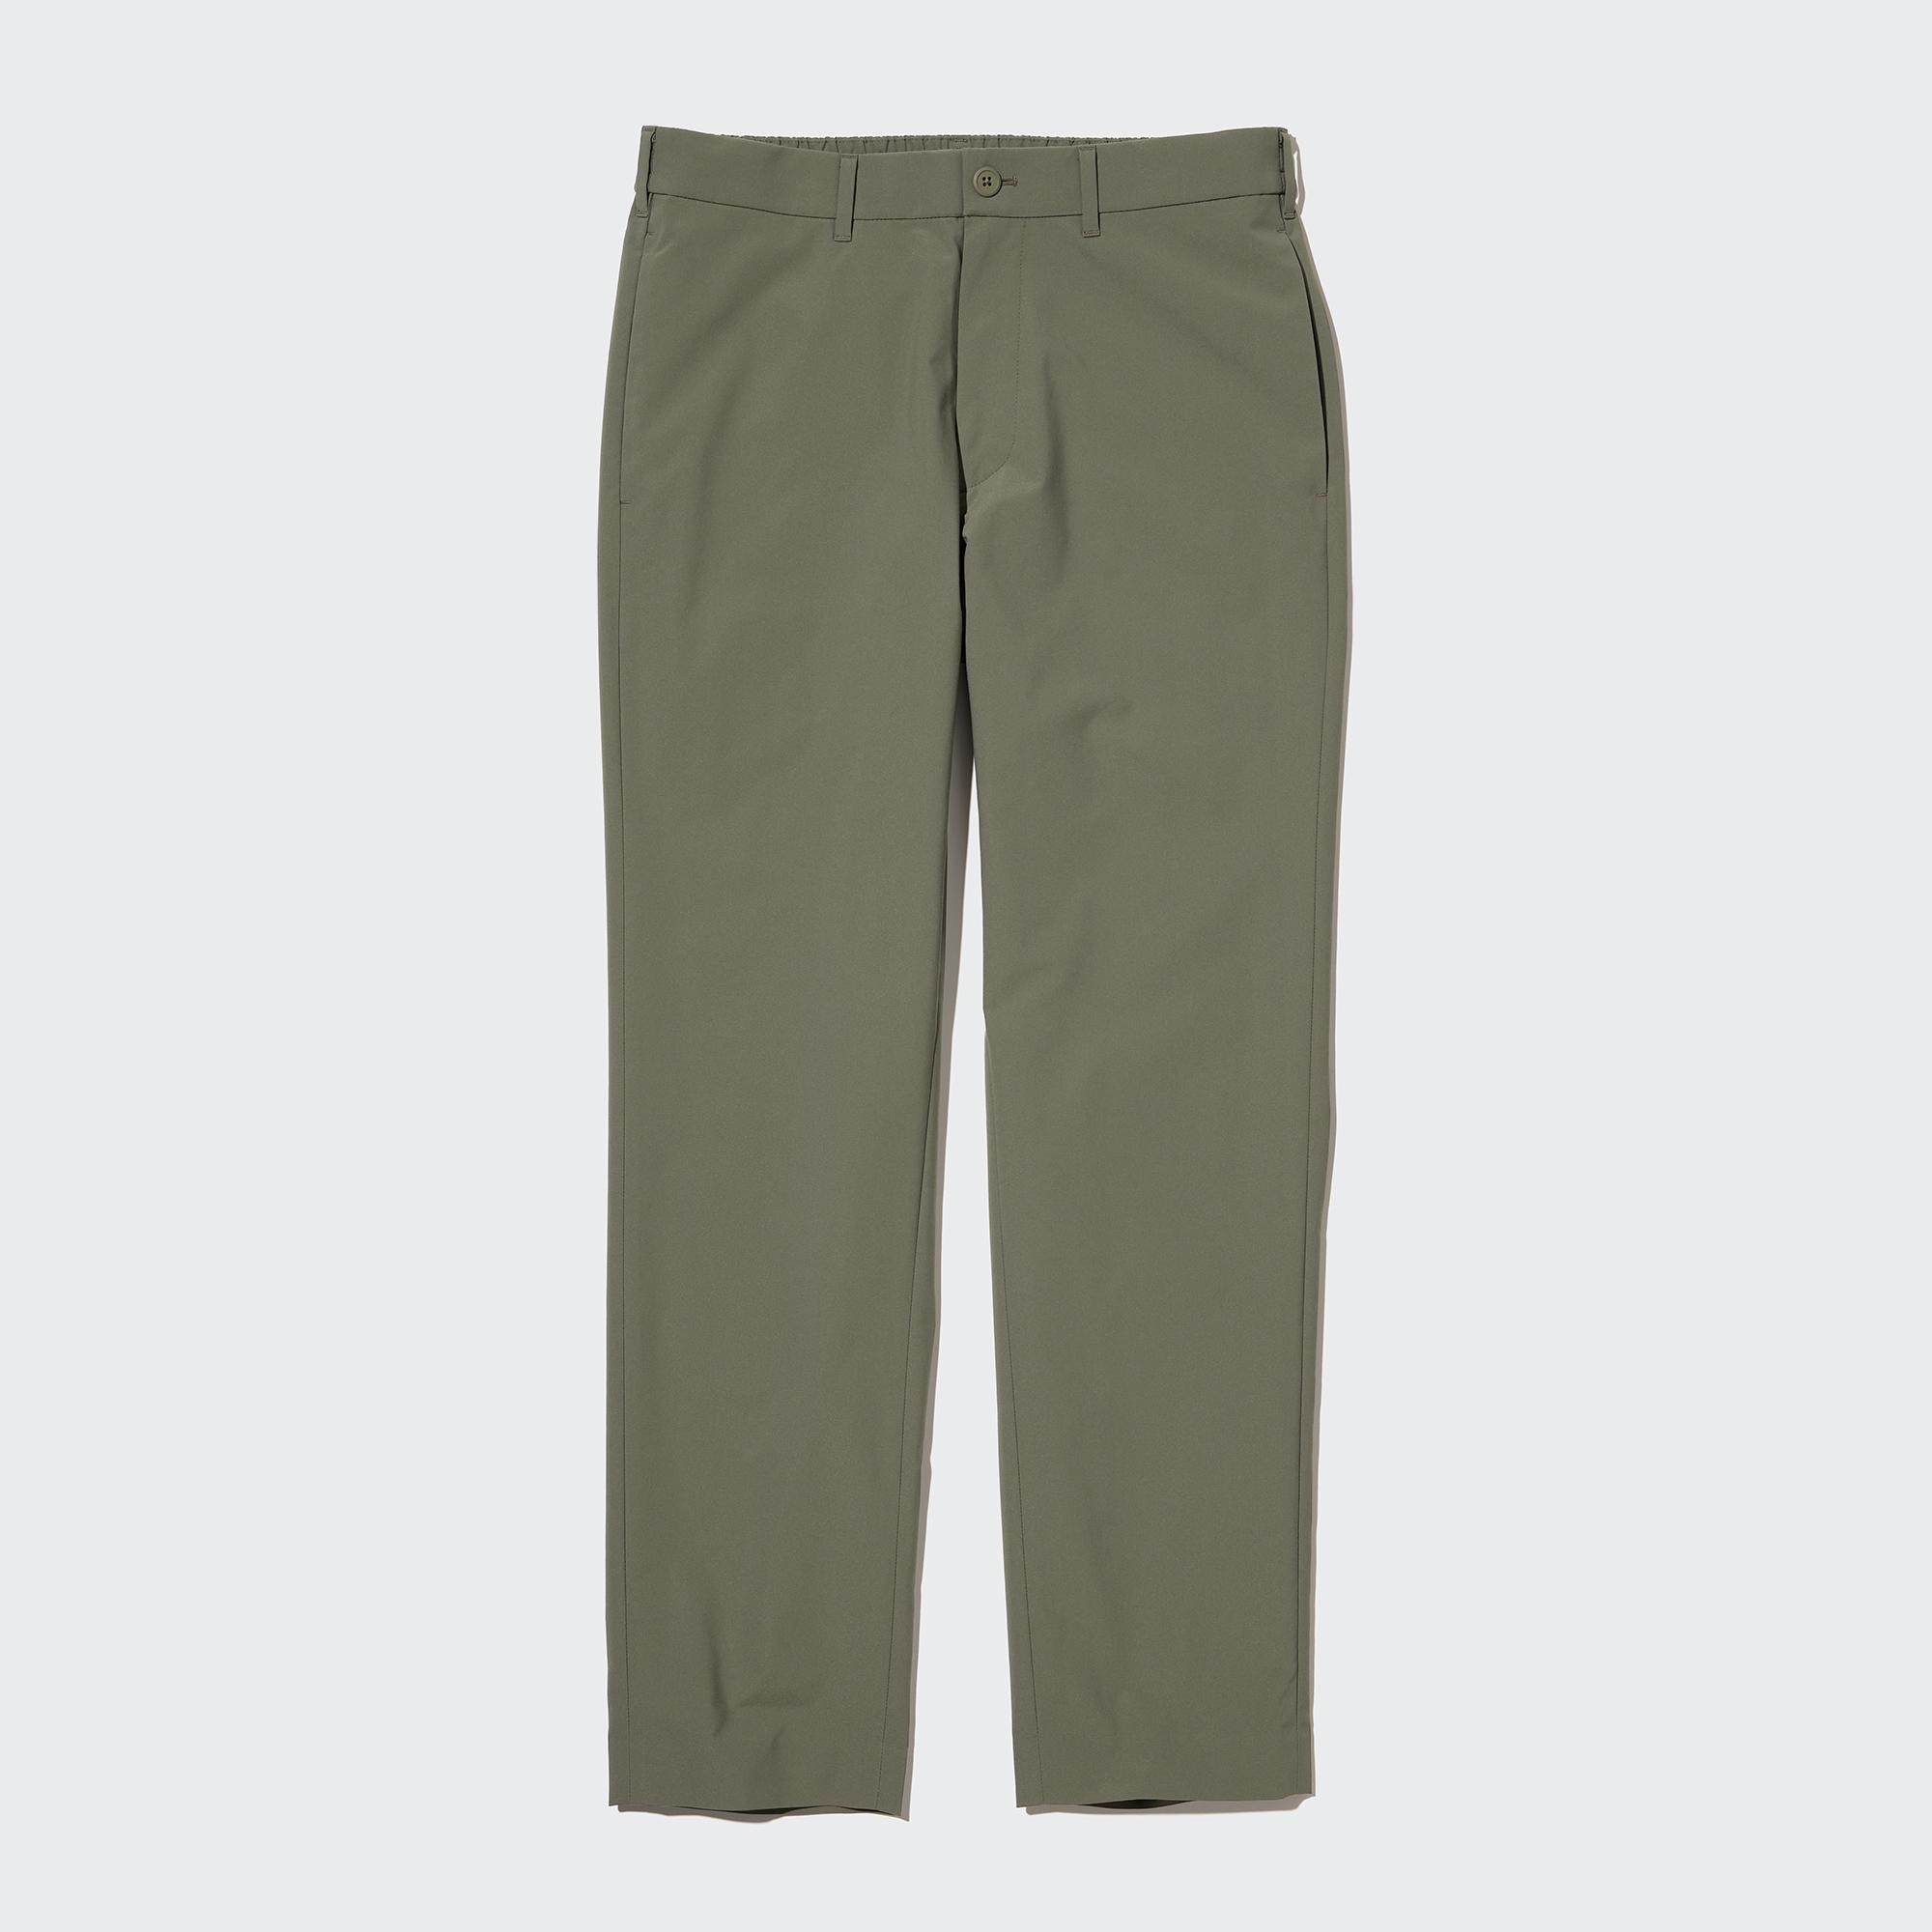 Buy Andamen Men's Linen Regular Fit Sage Linen Pants (Light Olive, 36) at  Amazon.in